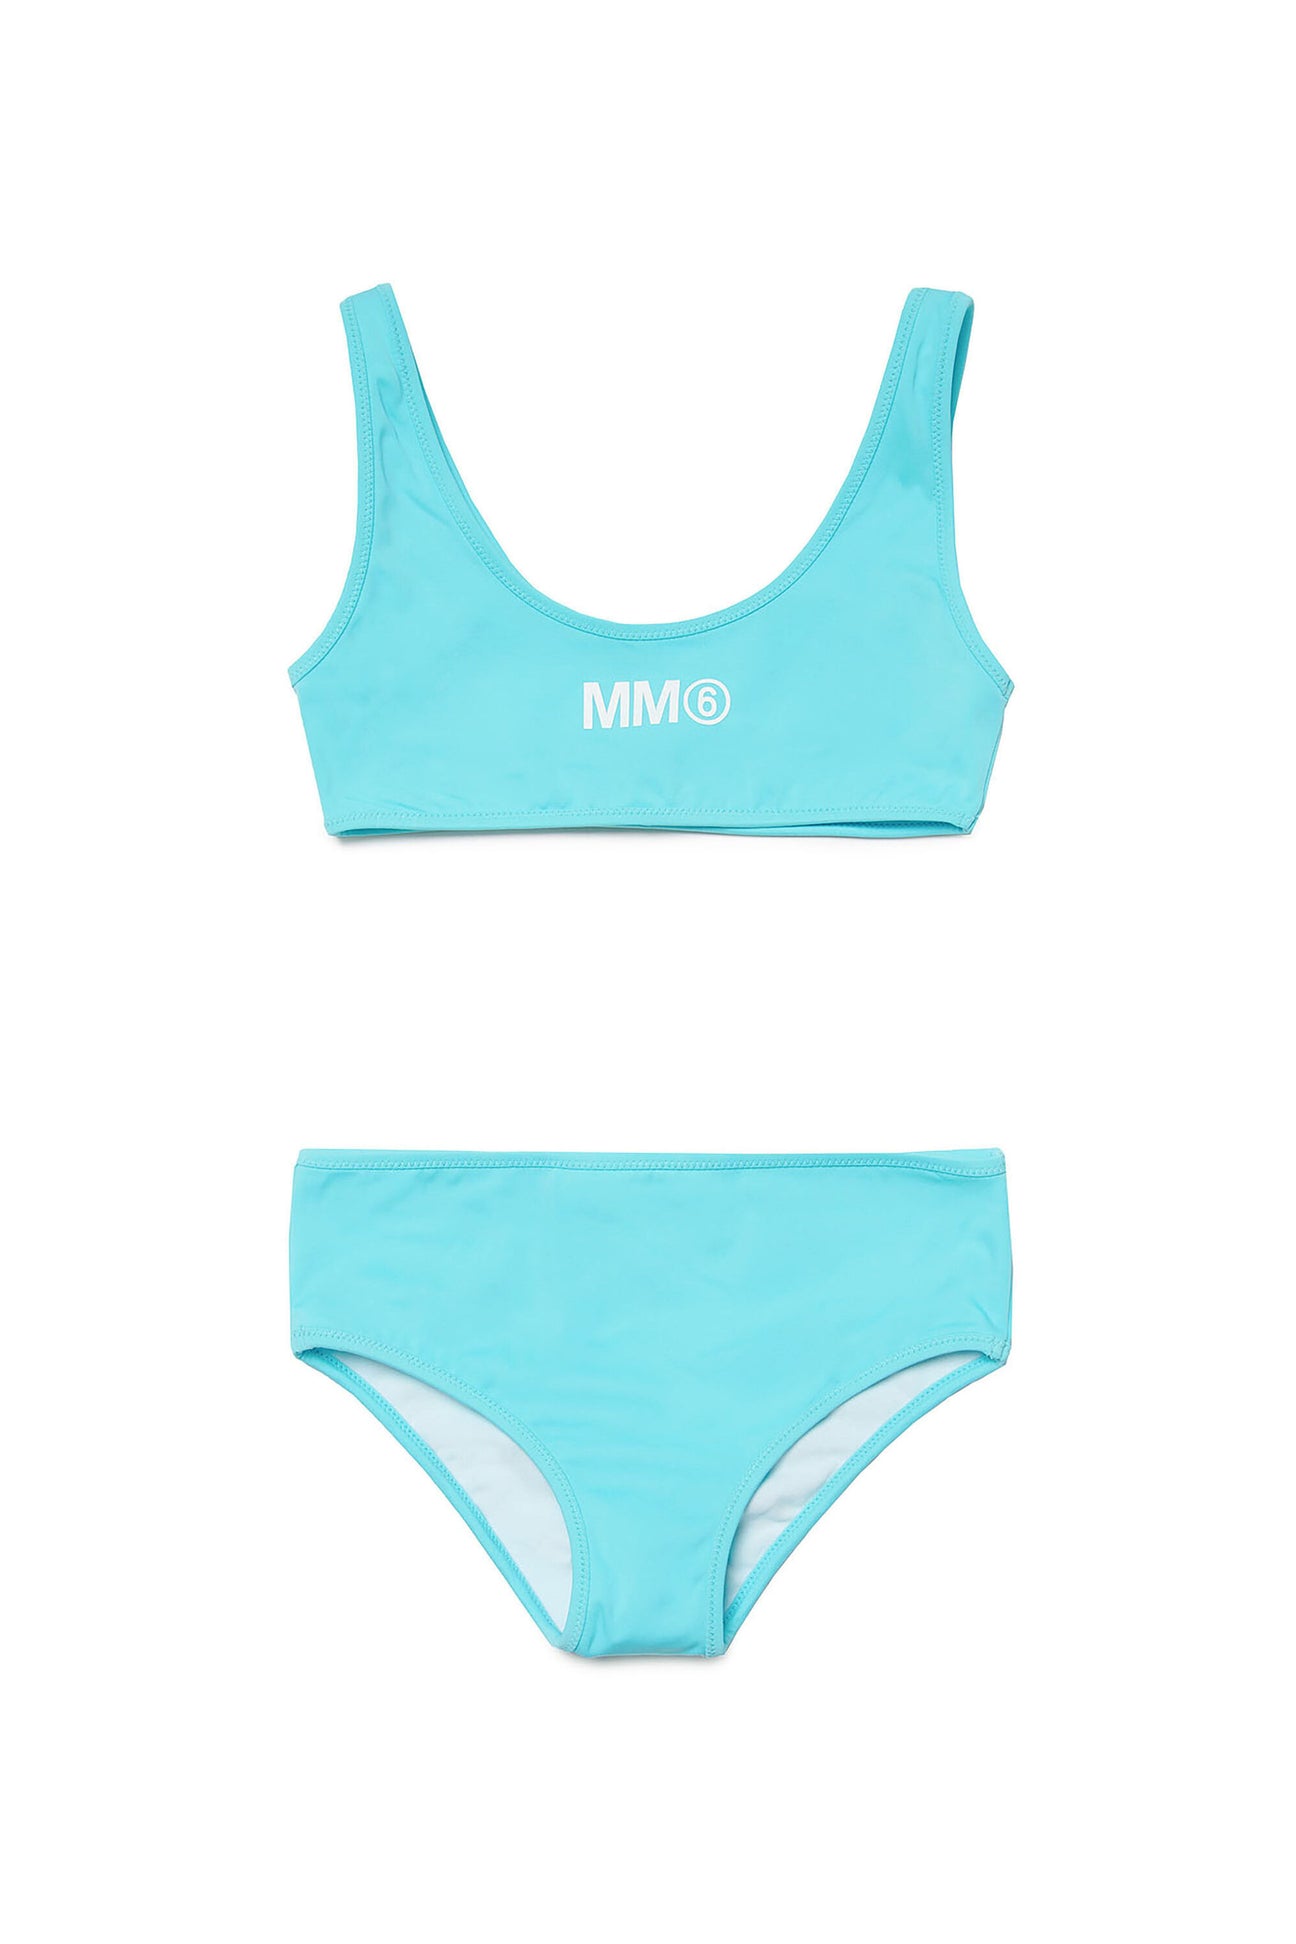 Lycra bikini swimsuit with MM6 logo 